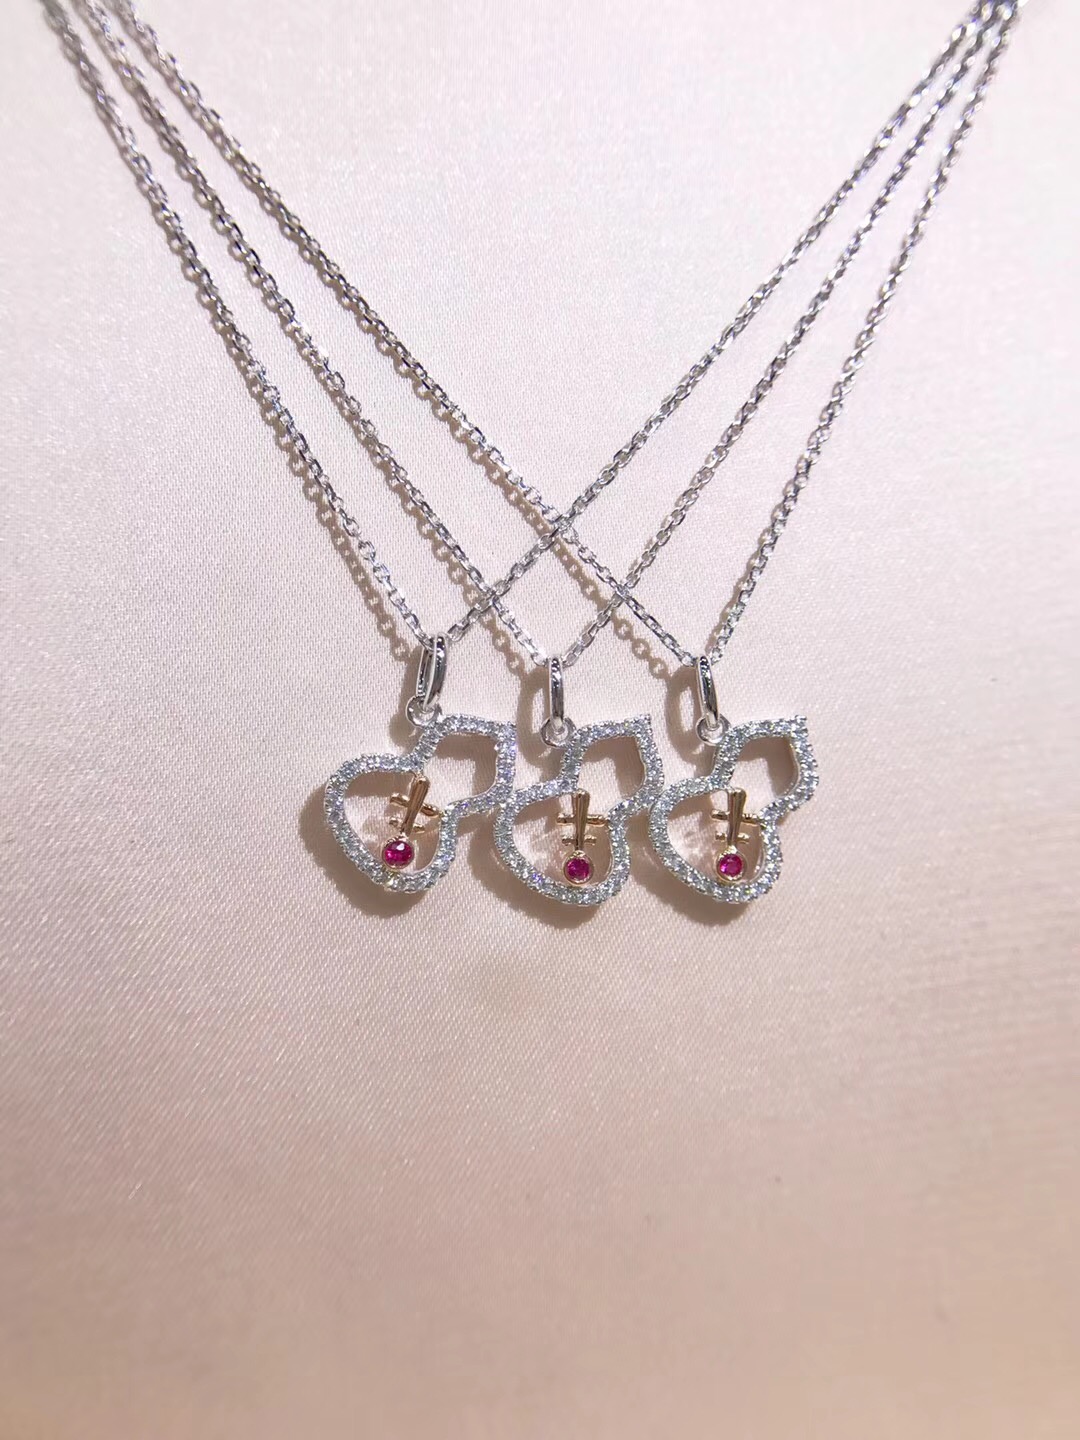 P00973 Calabash Diamond Necklace in 18k White Gold